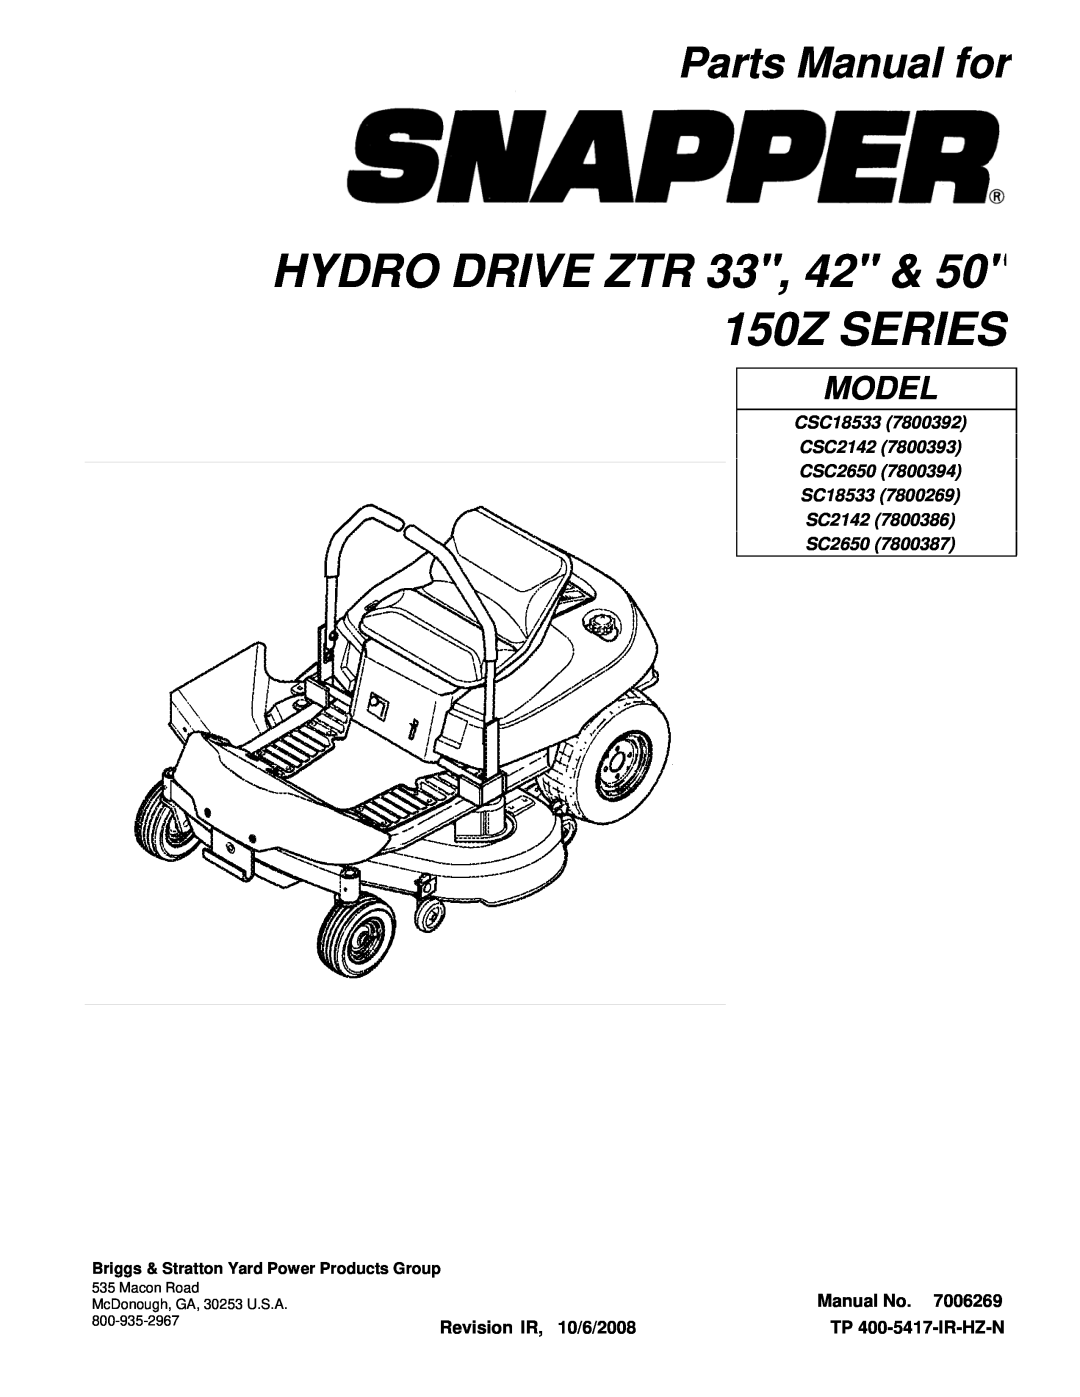 Snapper CSC18533 manual Parts Manual for, HYDRO DRIVE ZTR 33, 42 & 50 150Z SERIES, Model, Manual No, TP 400-5417-IR-HZ-N 